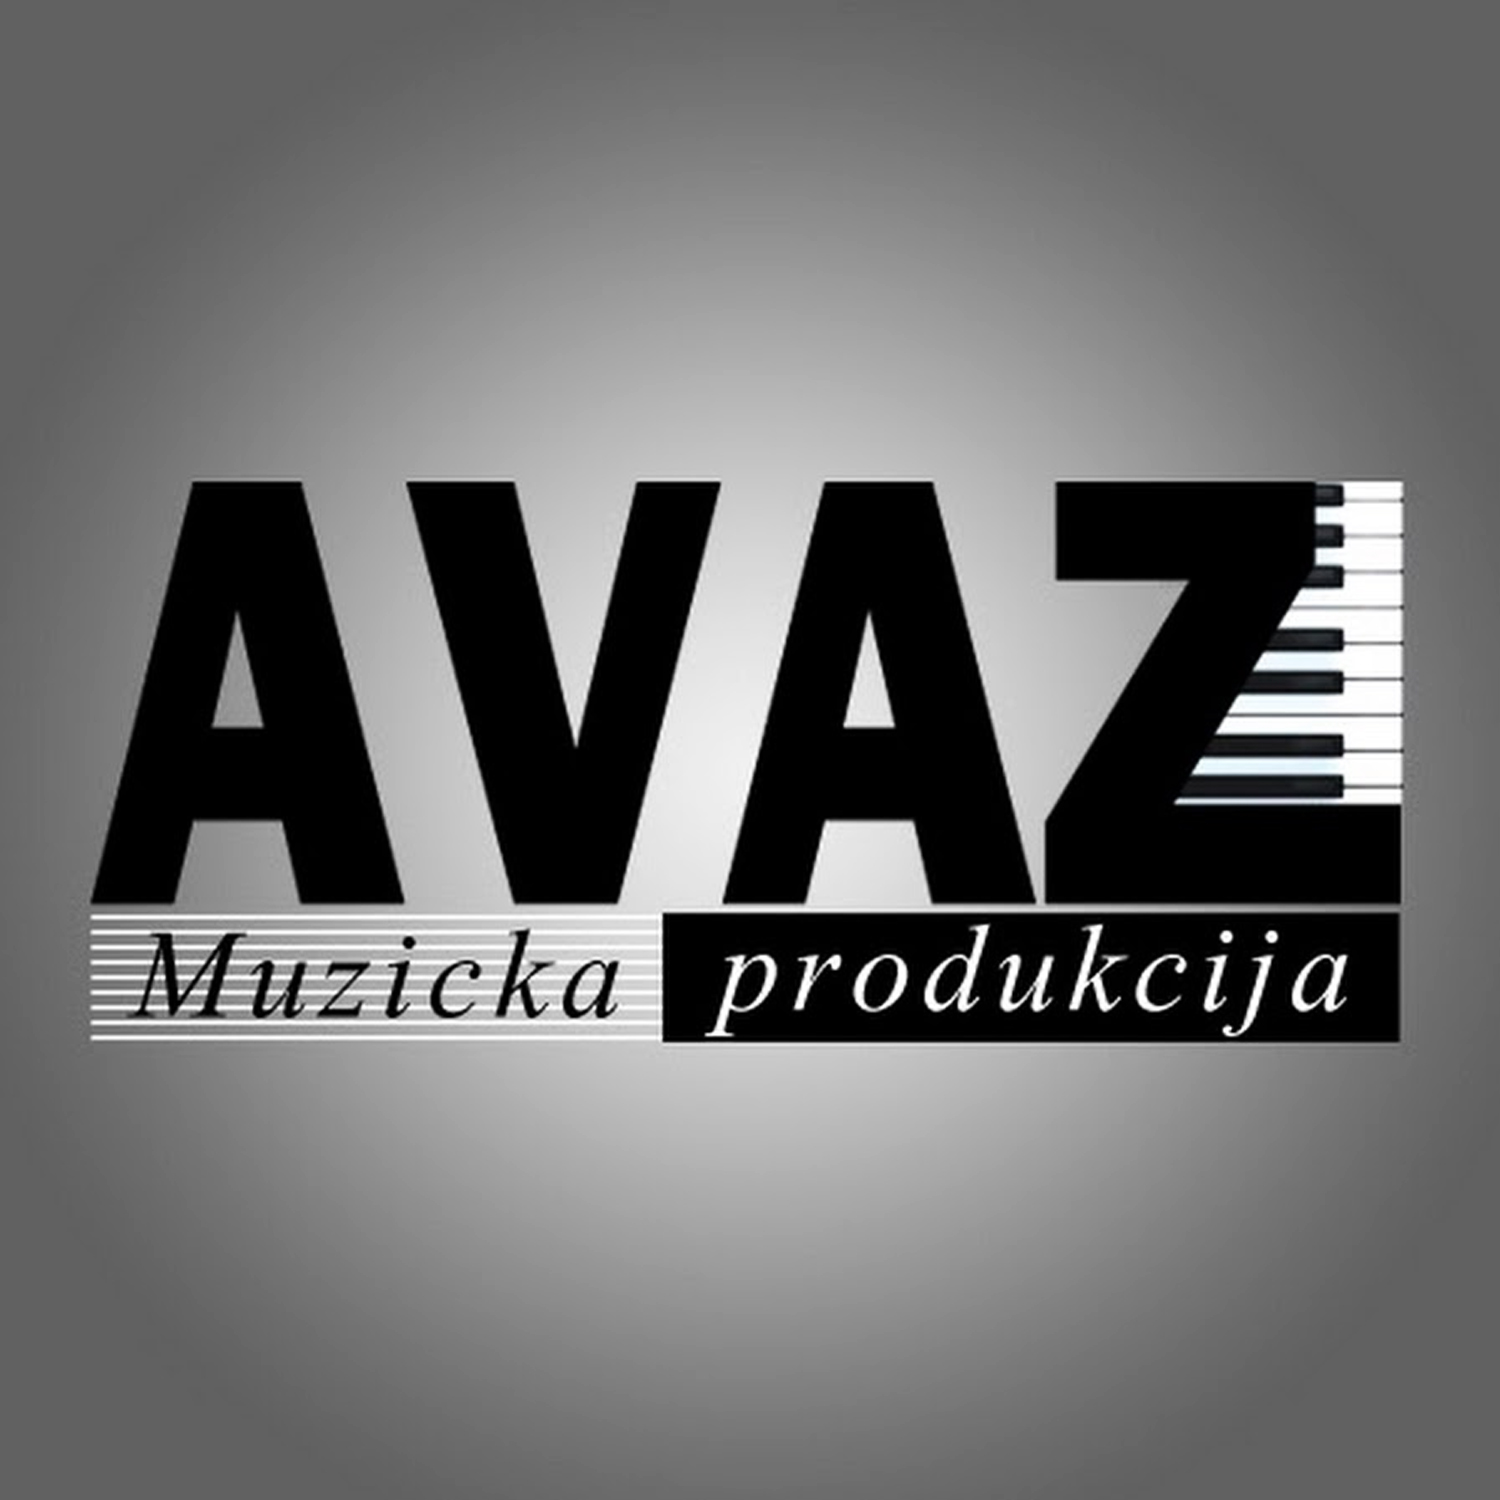 Muzicka Produkcija Avaz - Facebook, Instagram, Twitter, Snapchat, Website, Telefon, Email - Kontakt & Informacije | EMDC Network